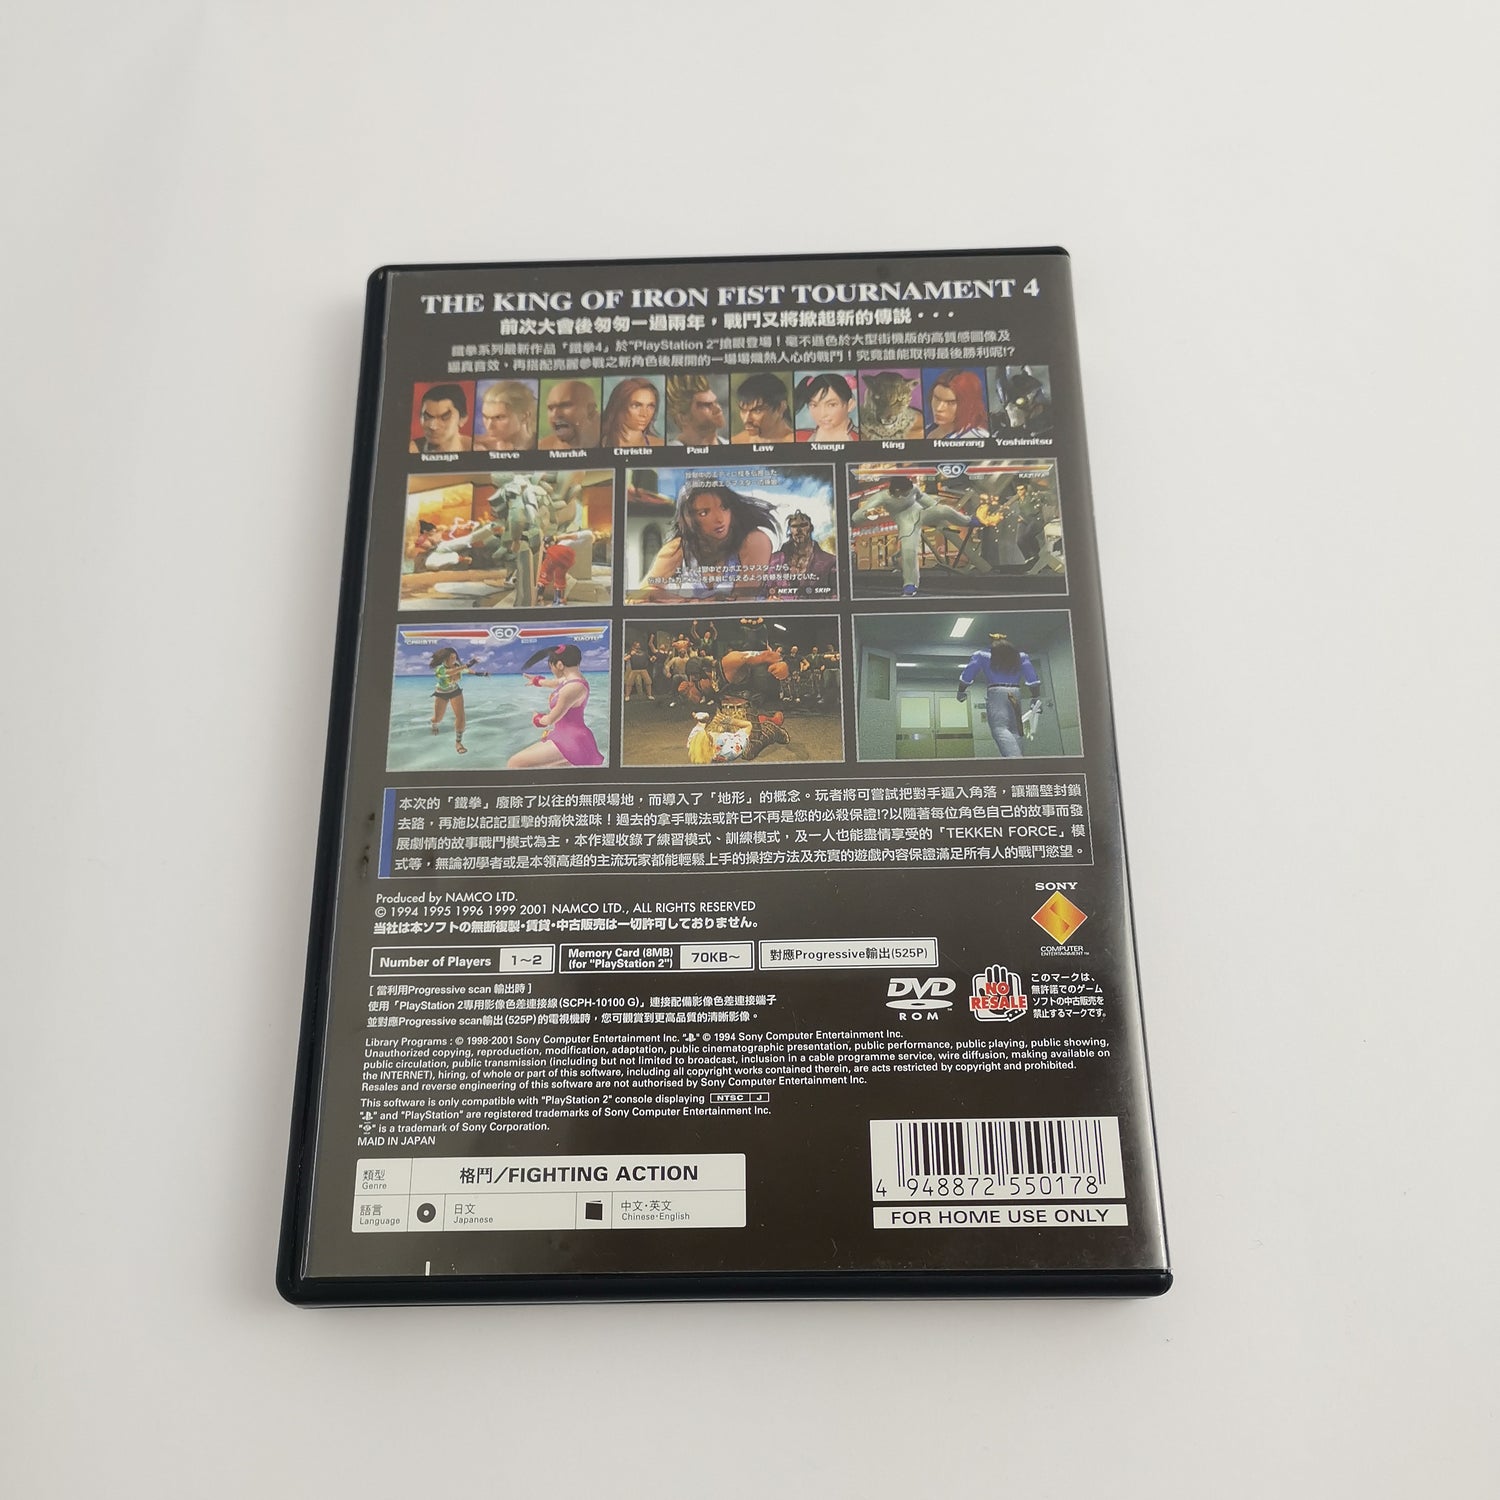 Sony Playstation 2 Game: Tekken 4 | PS2 Namco - OVP NTSC-J JAPAN version